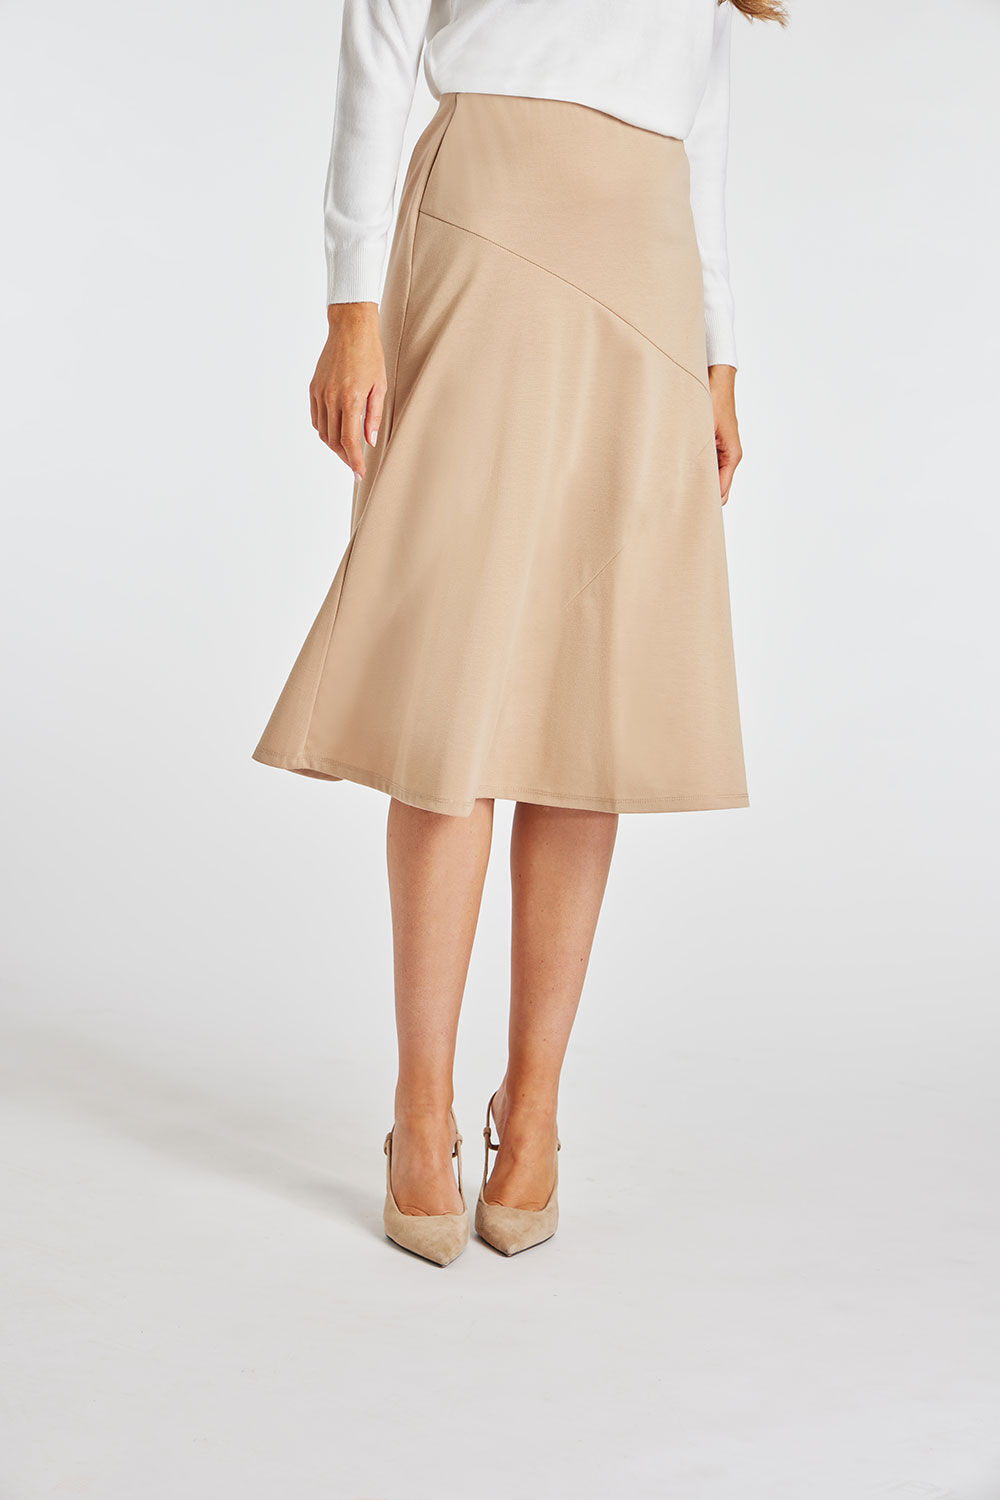 Bonmarche Natural Plain Paneled Elasticated Skirt, Size: 12